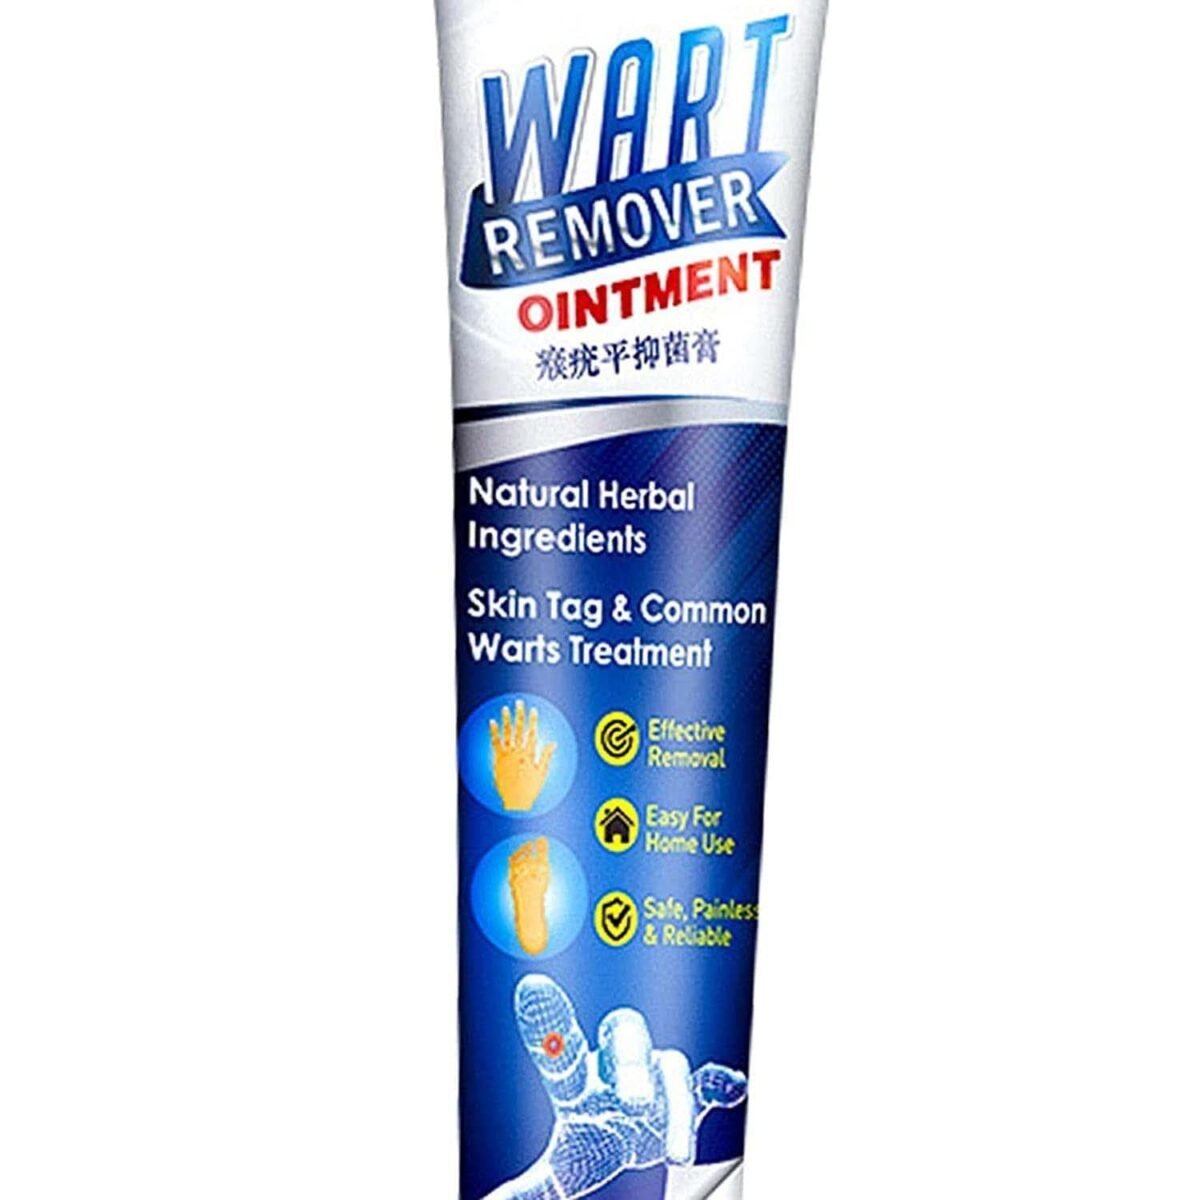 Wart Remover, Blemish Cream, Instant Blemish Removal Gel